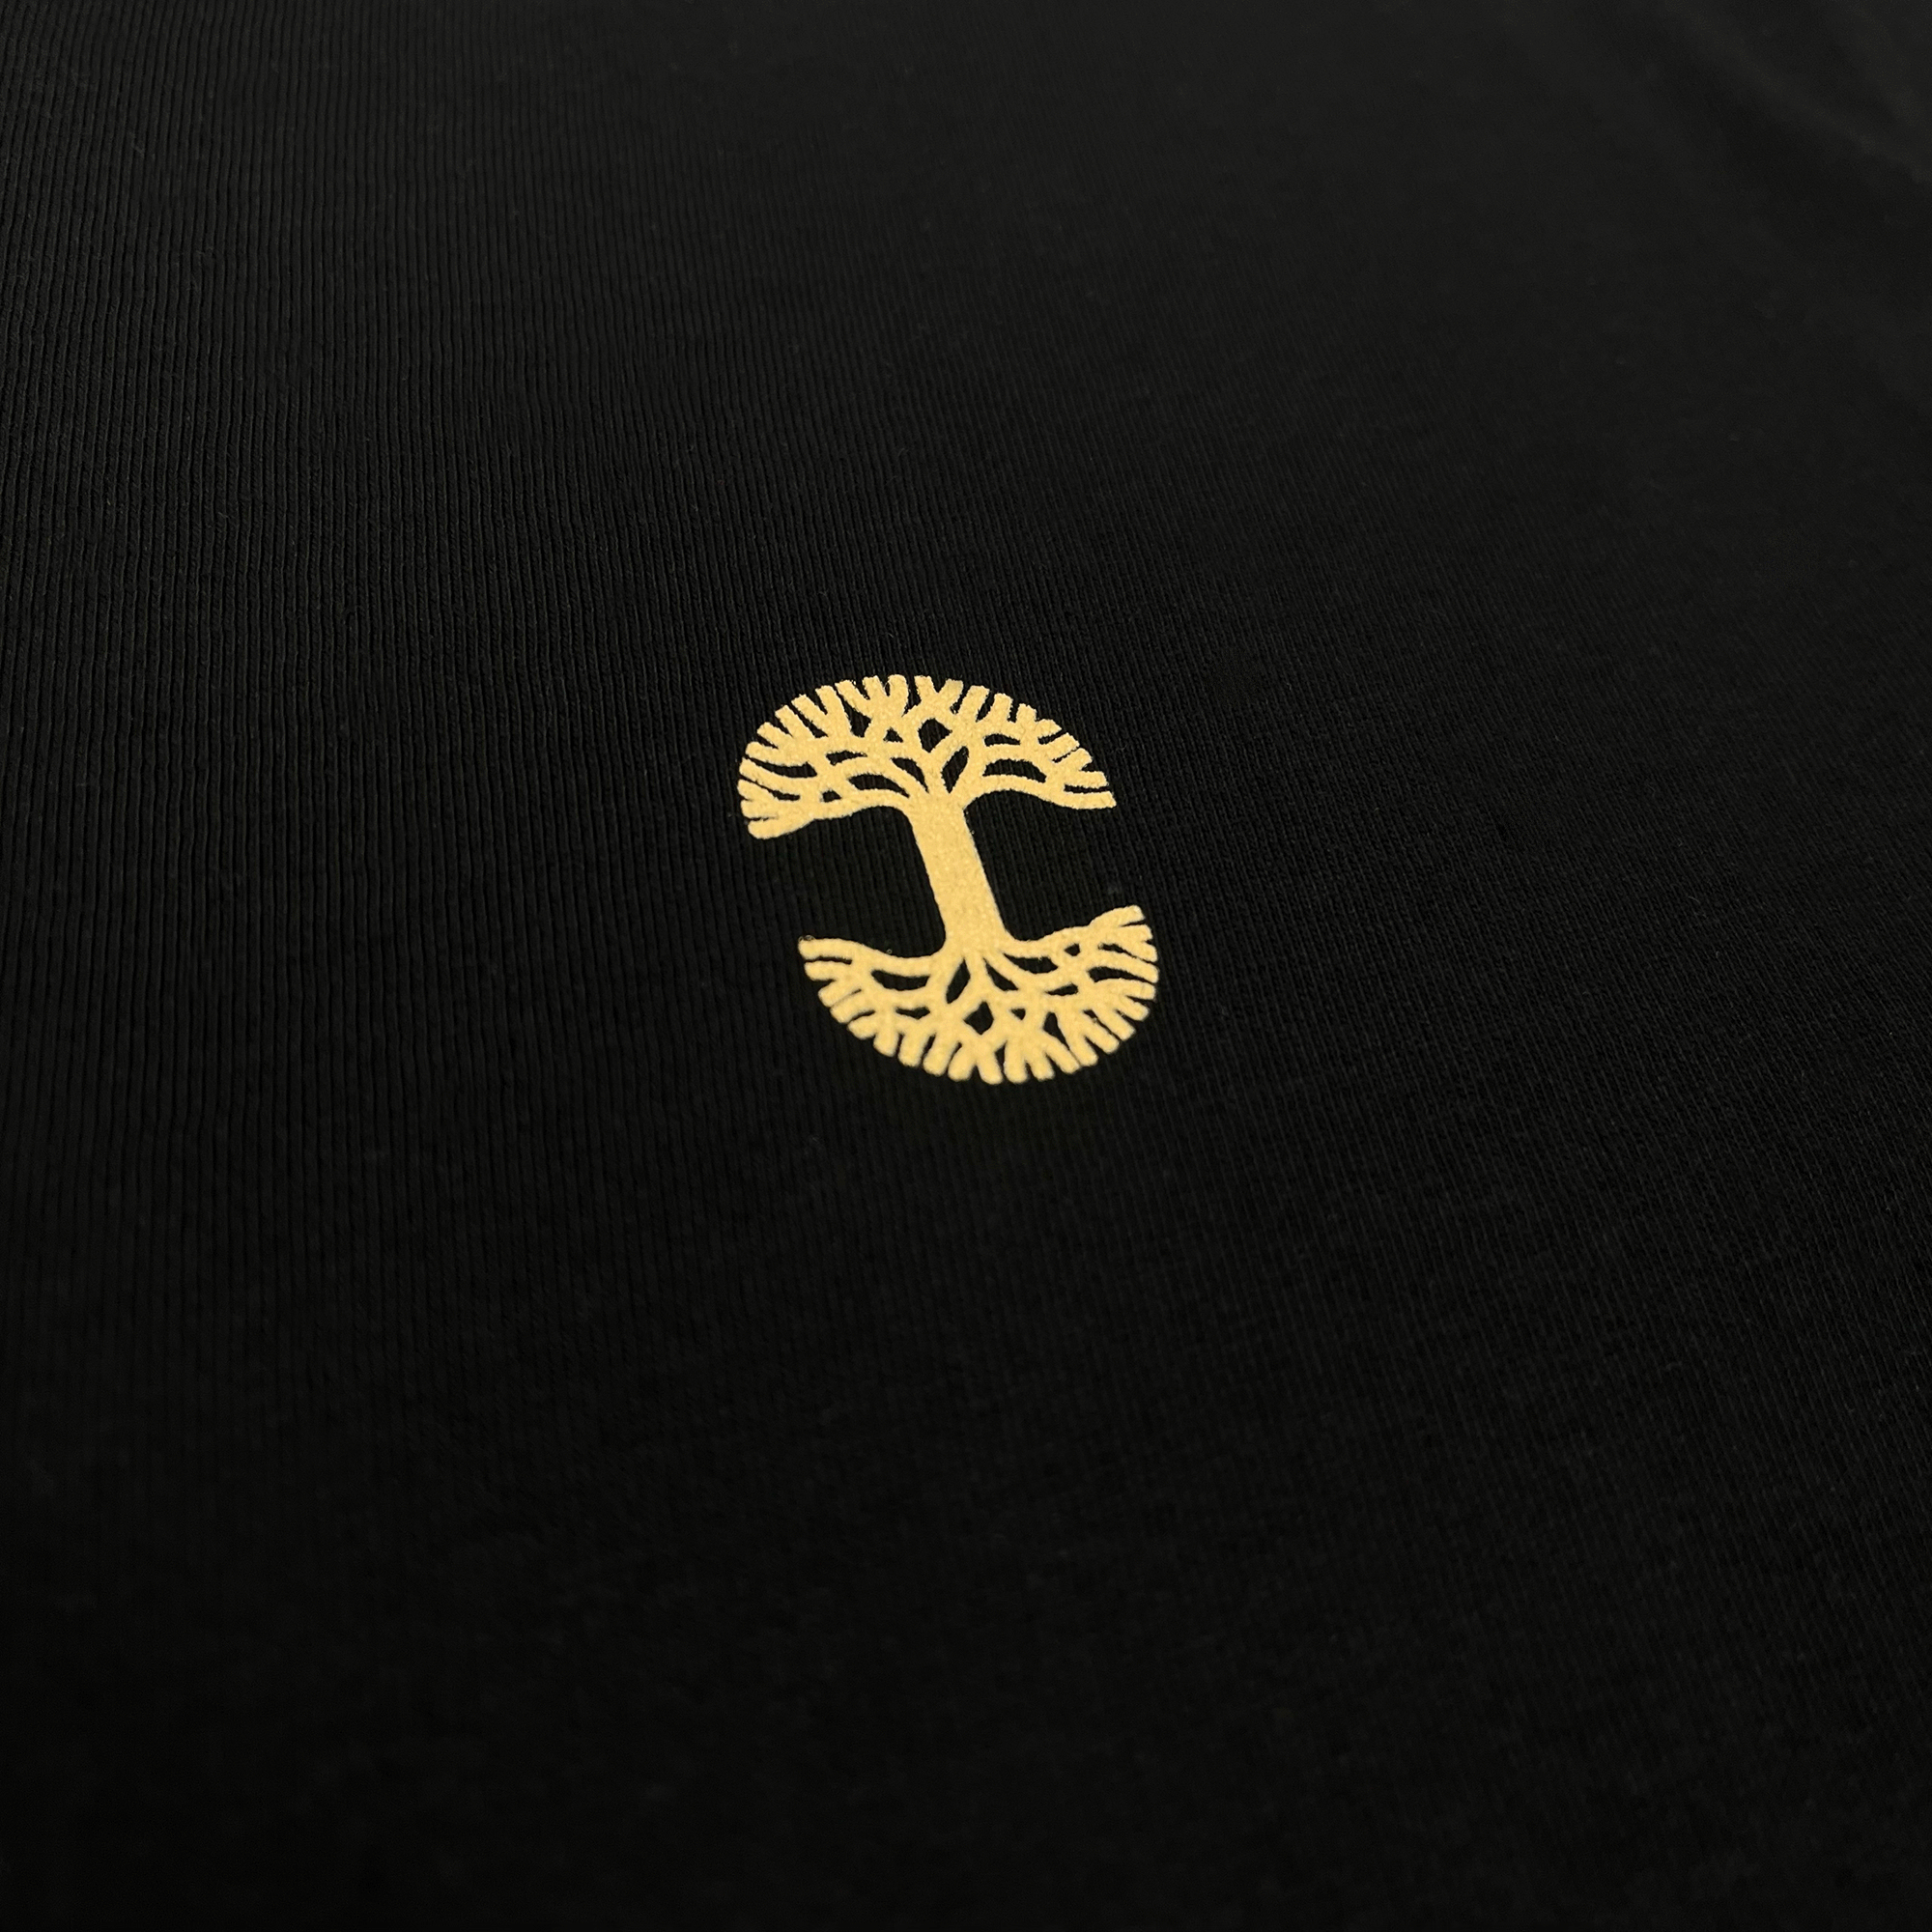 Close up yellow Oaklandish tree log on chest of black t-shirt.